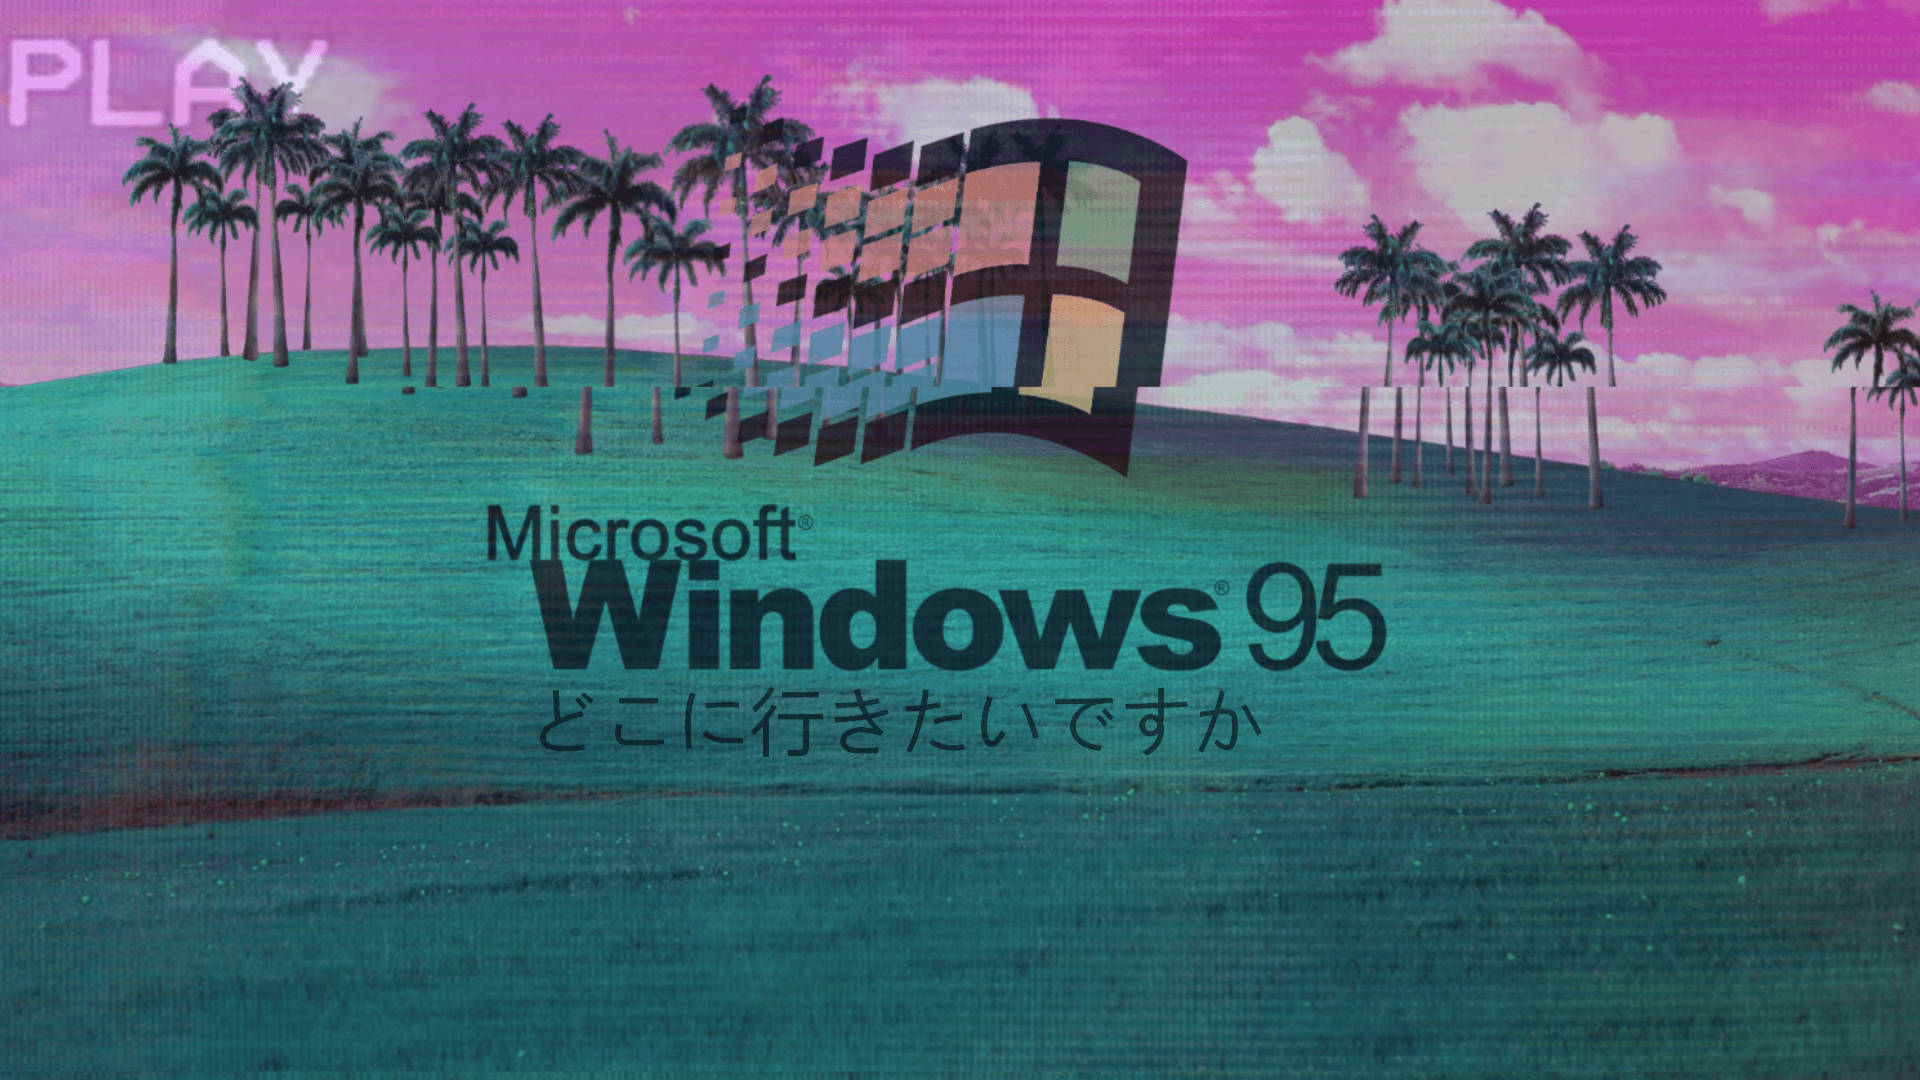 Aesthetic Teal Windows 95 Retrowave Design Wallpaper